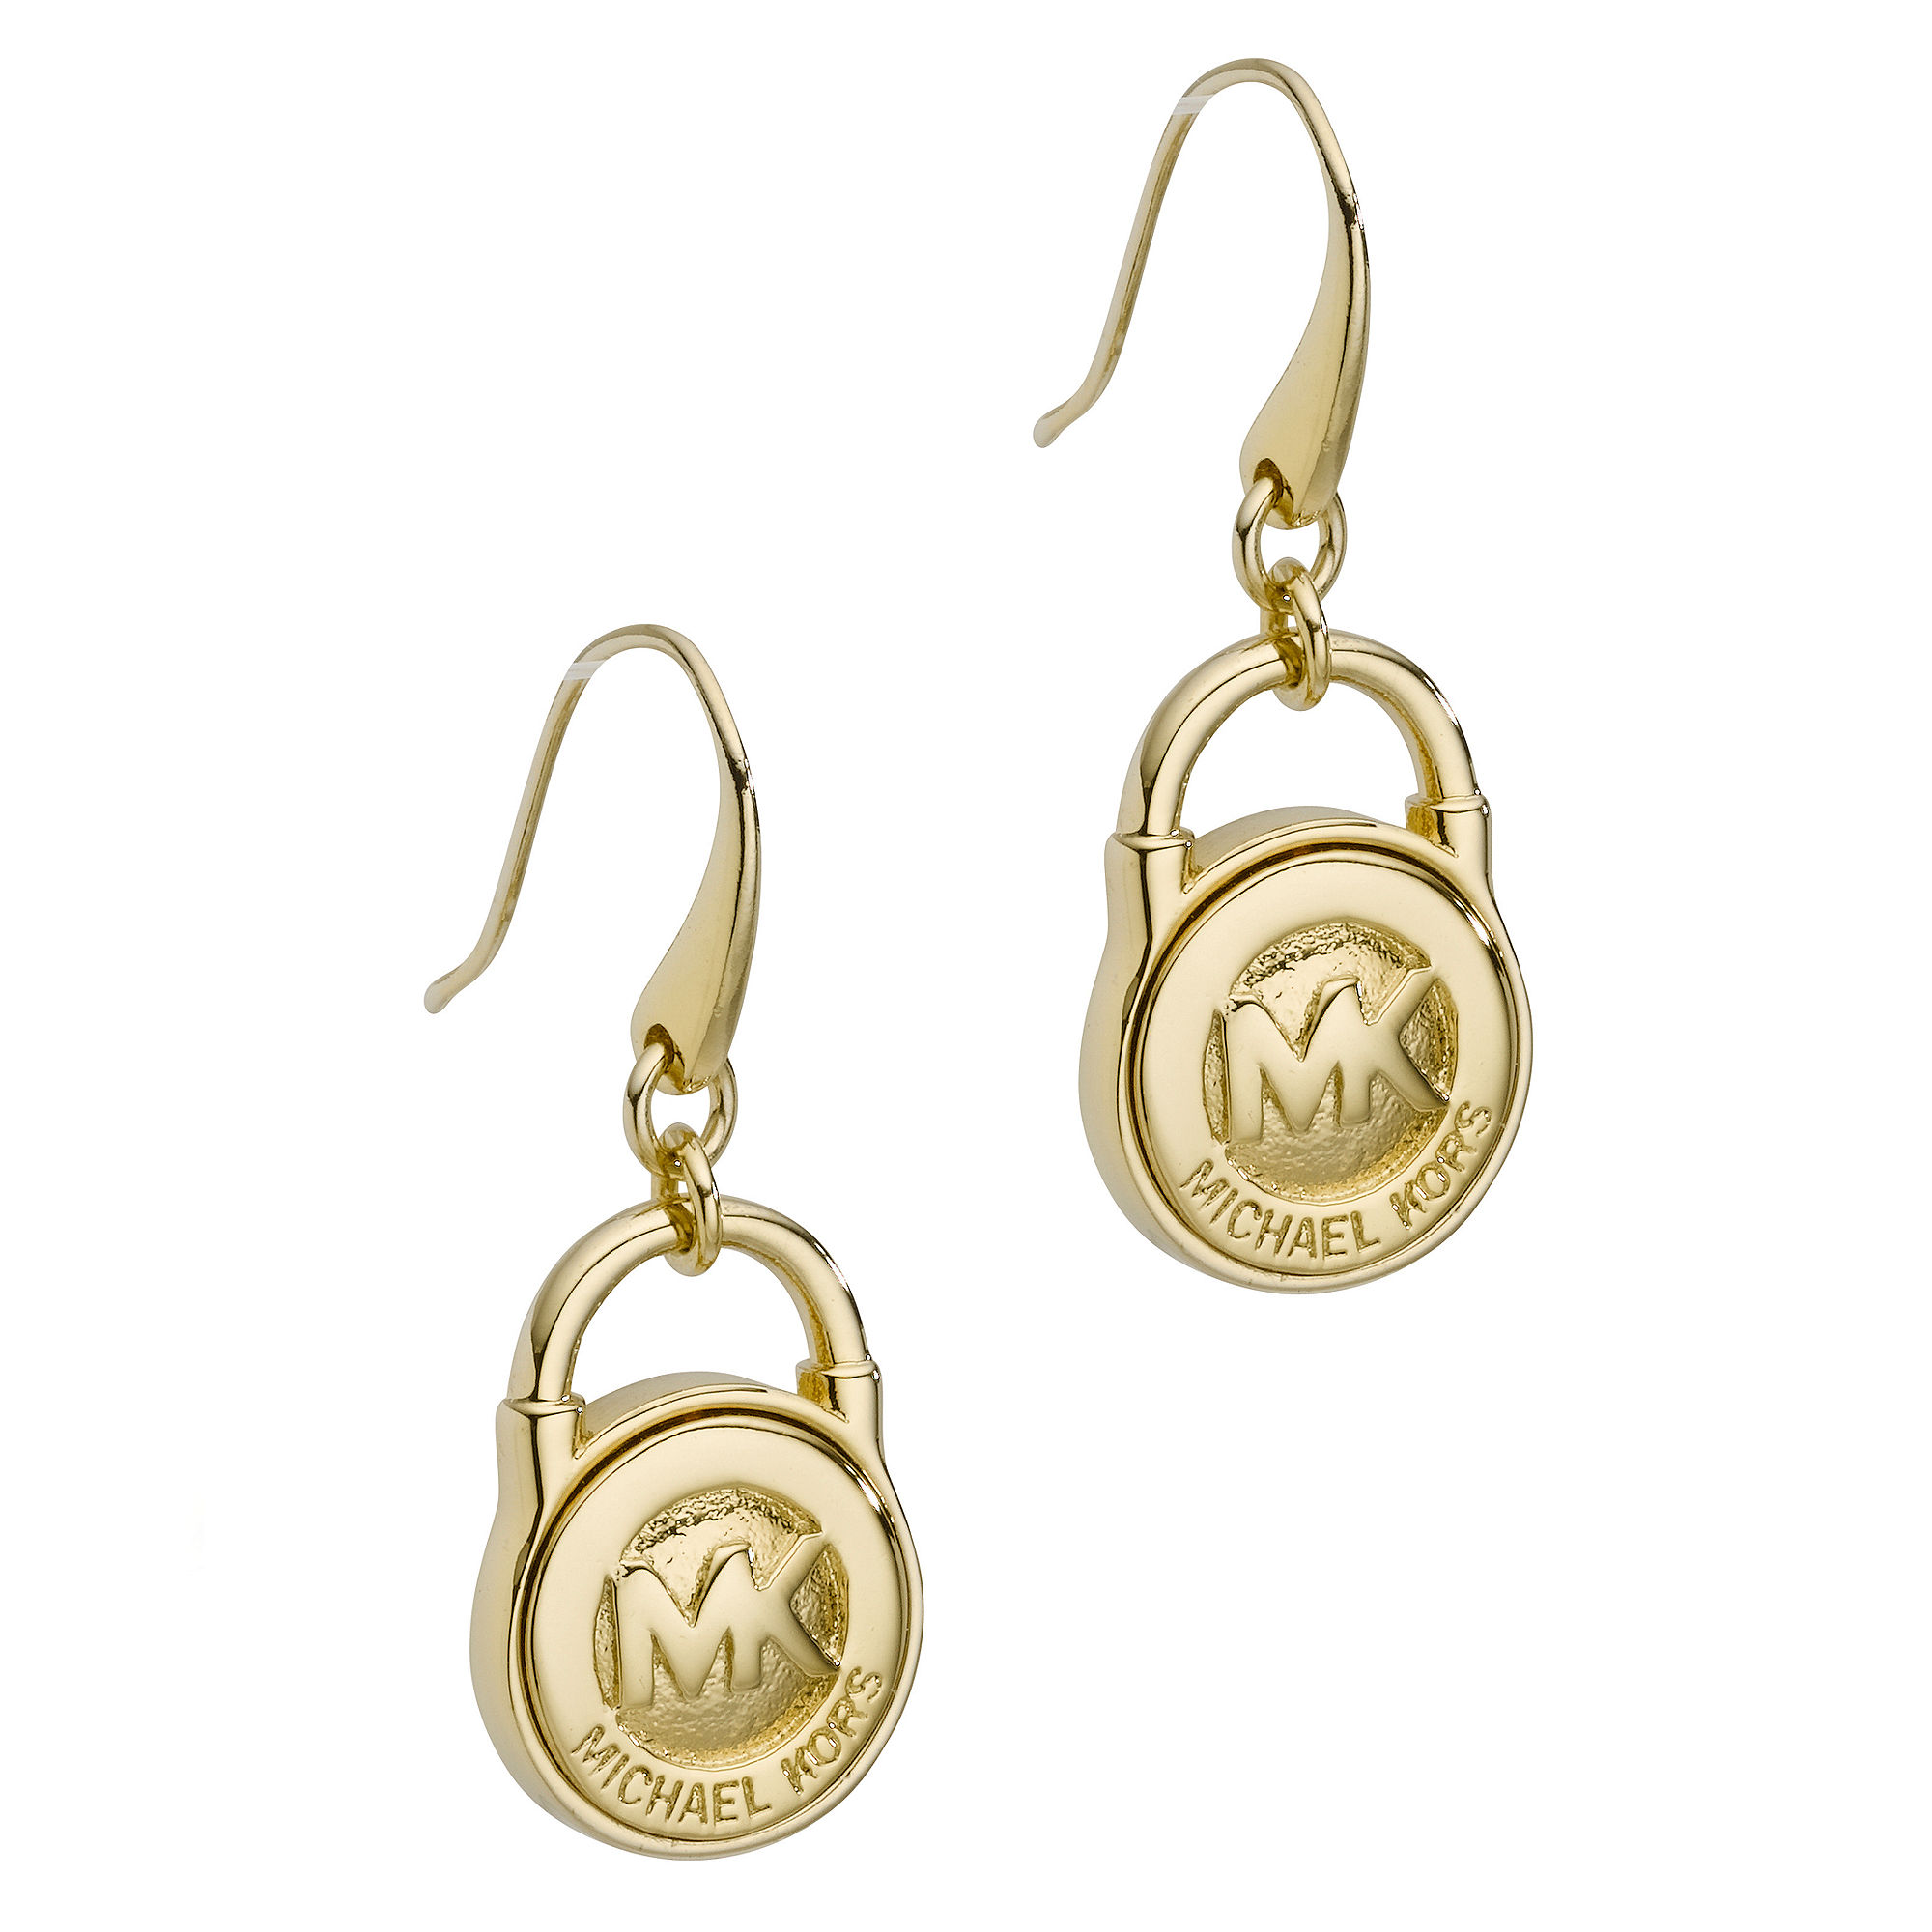 Michael Kors Lock Earrings in Metallic 